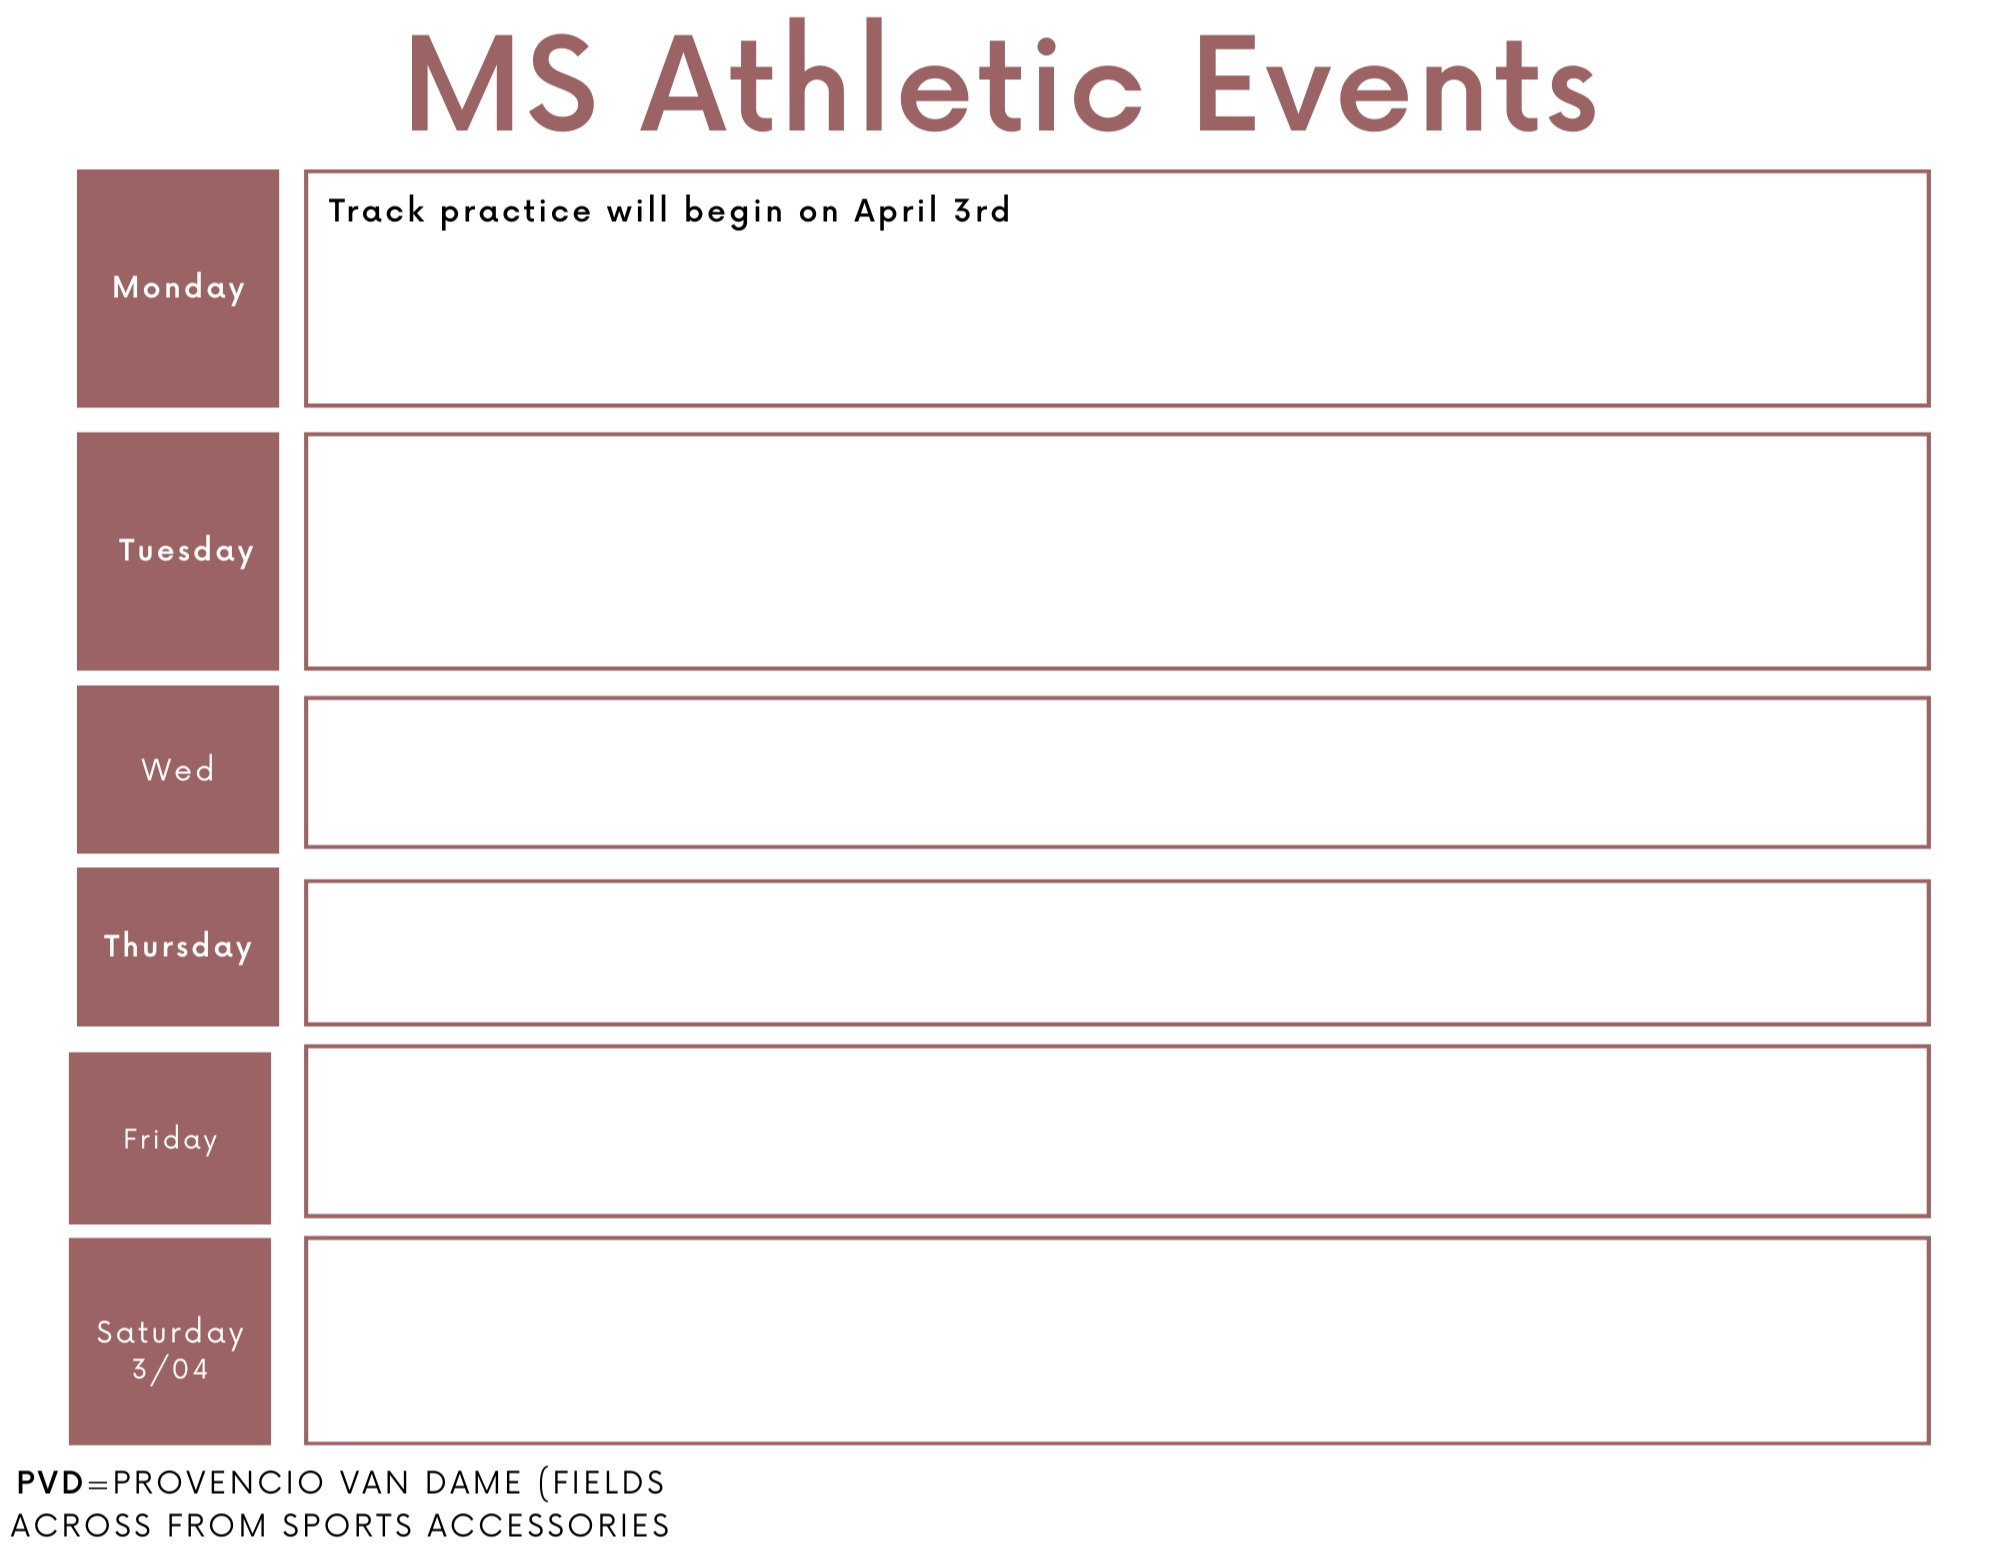 MS Athletics